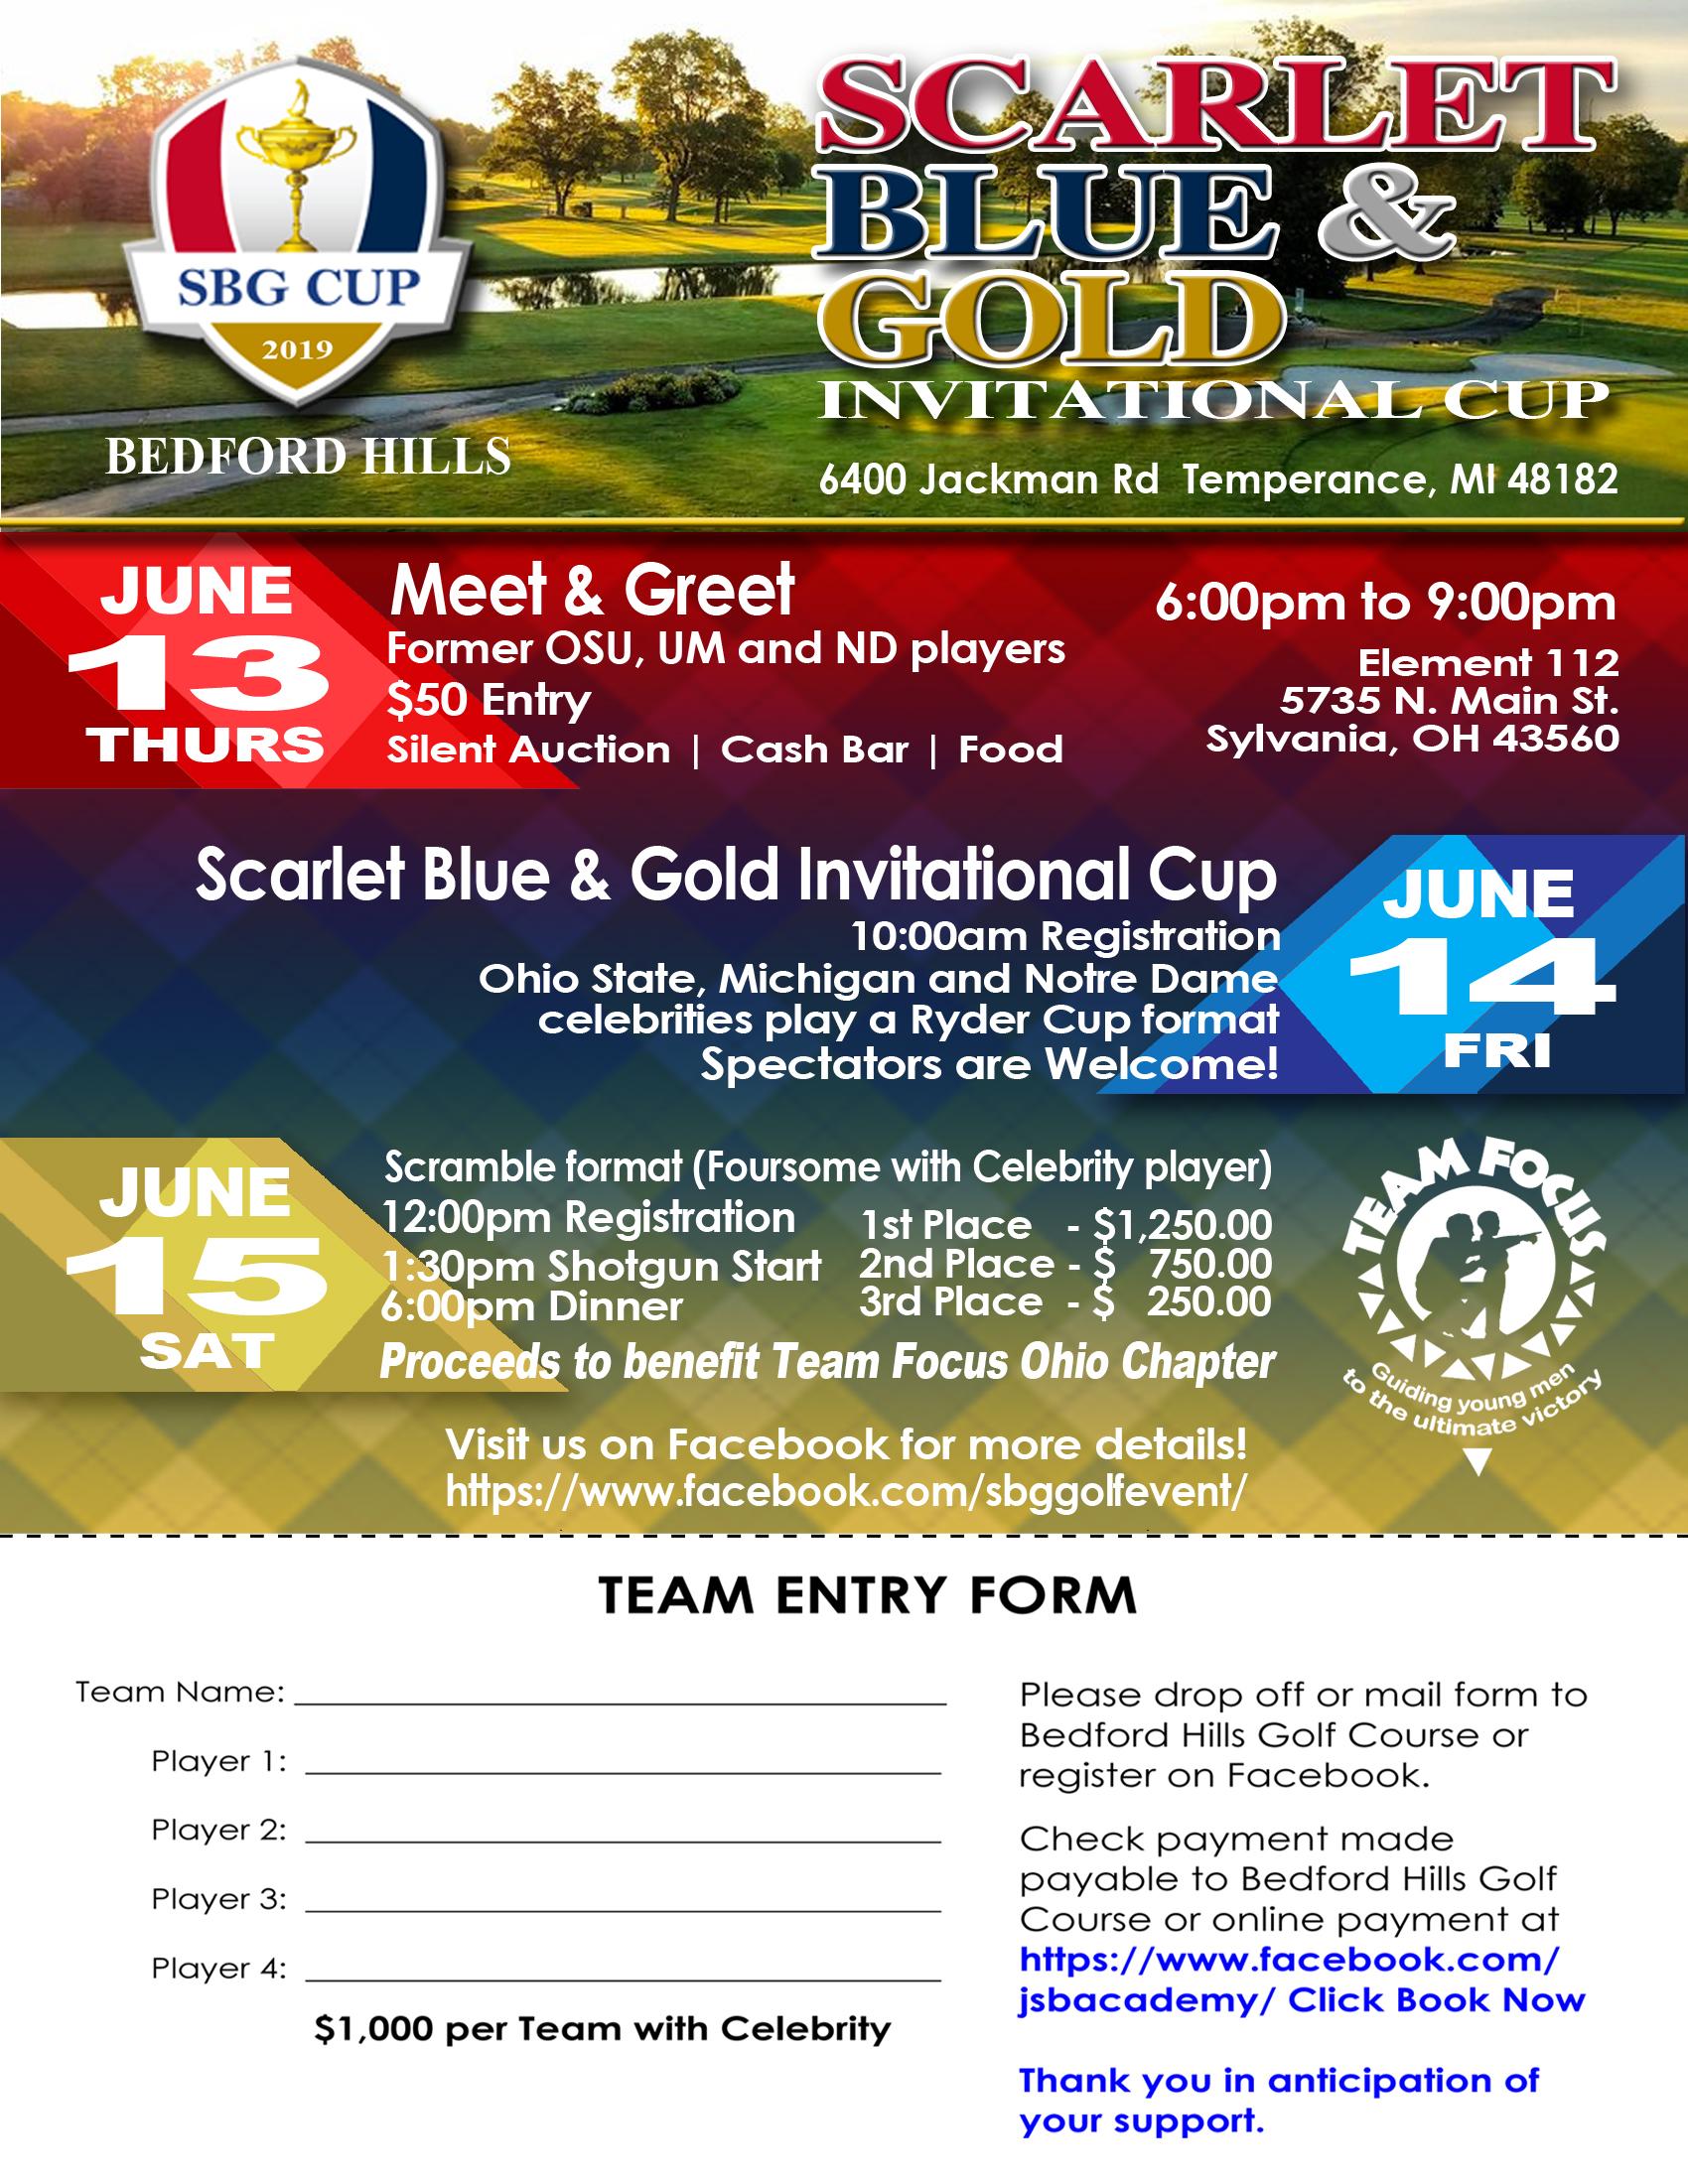 SBG Invitational Celebrity Golf Event